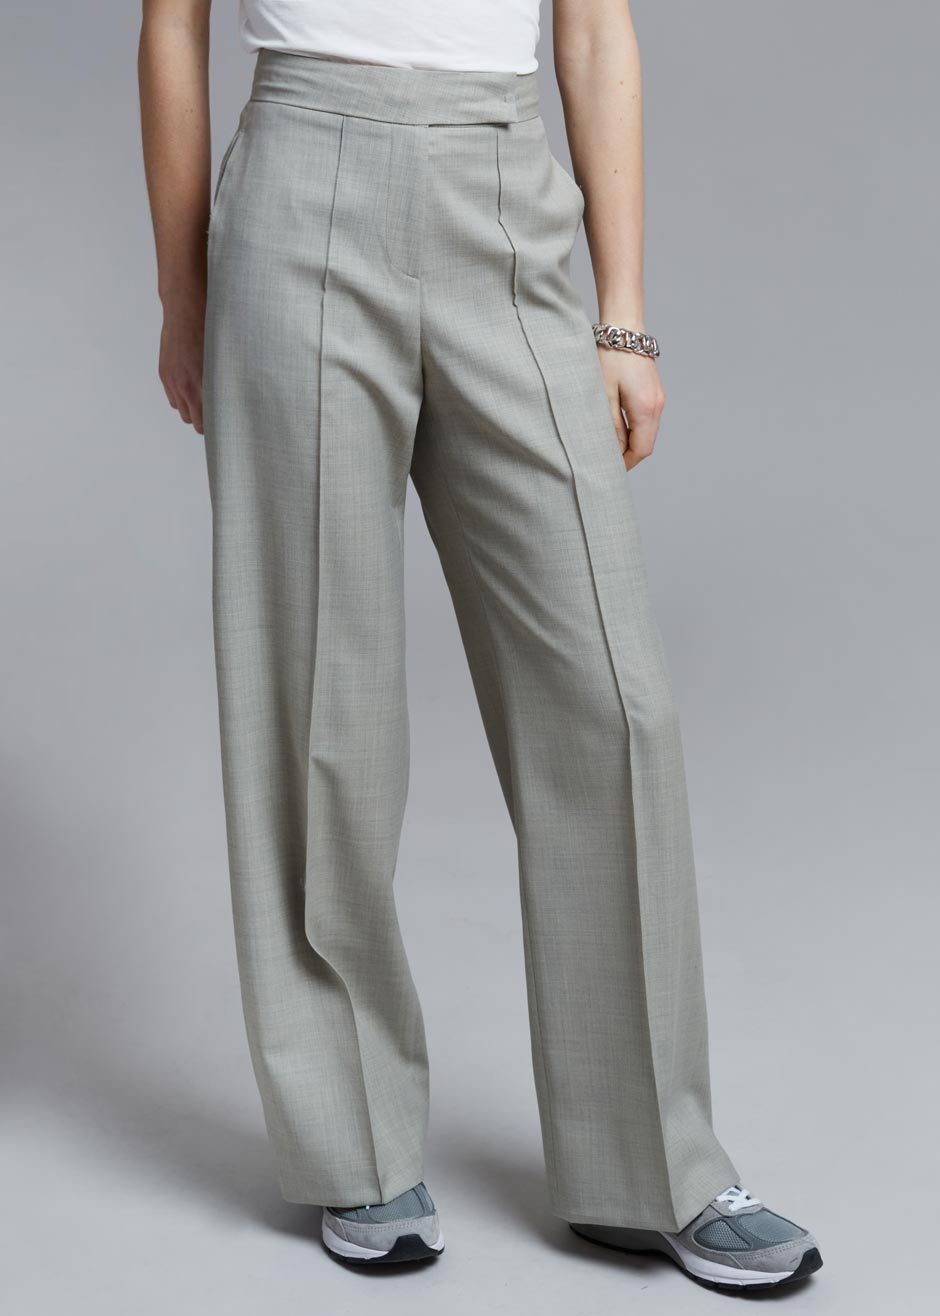 Mattea Suit Trousers in Agate Melange - 2